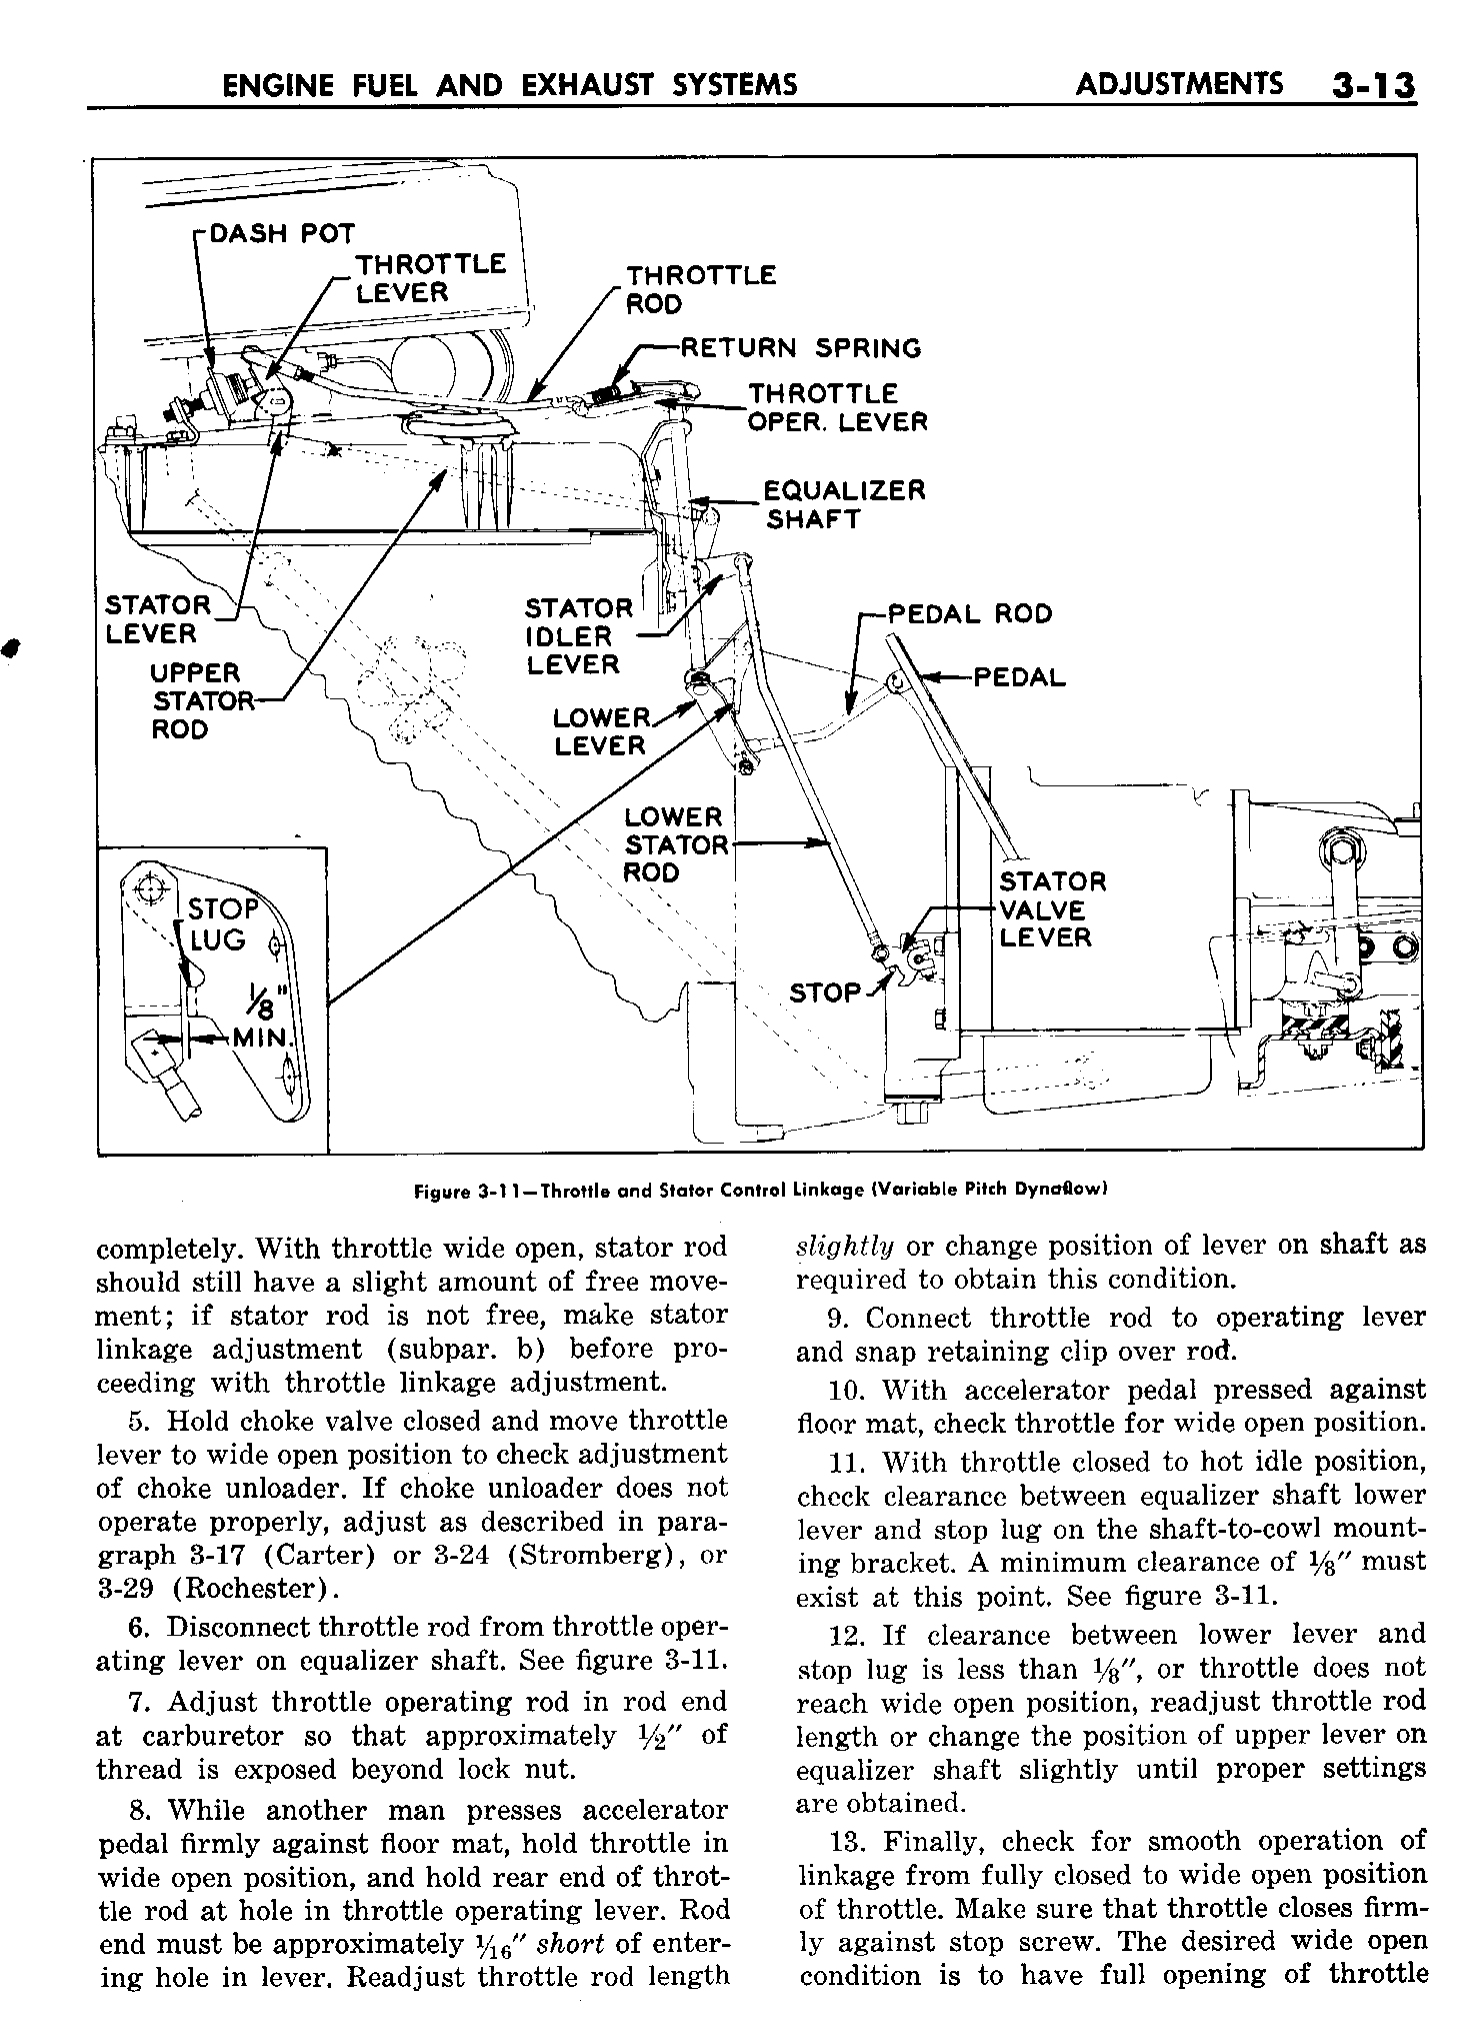 n_04 1958 Buick Shop Manual - Engine Fuel & Exhaust_13.jpg